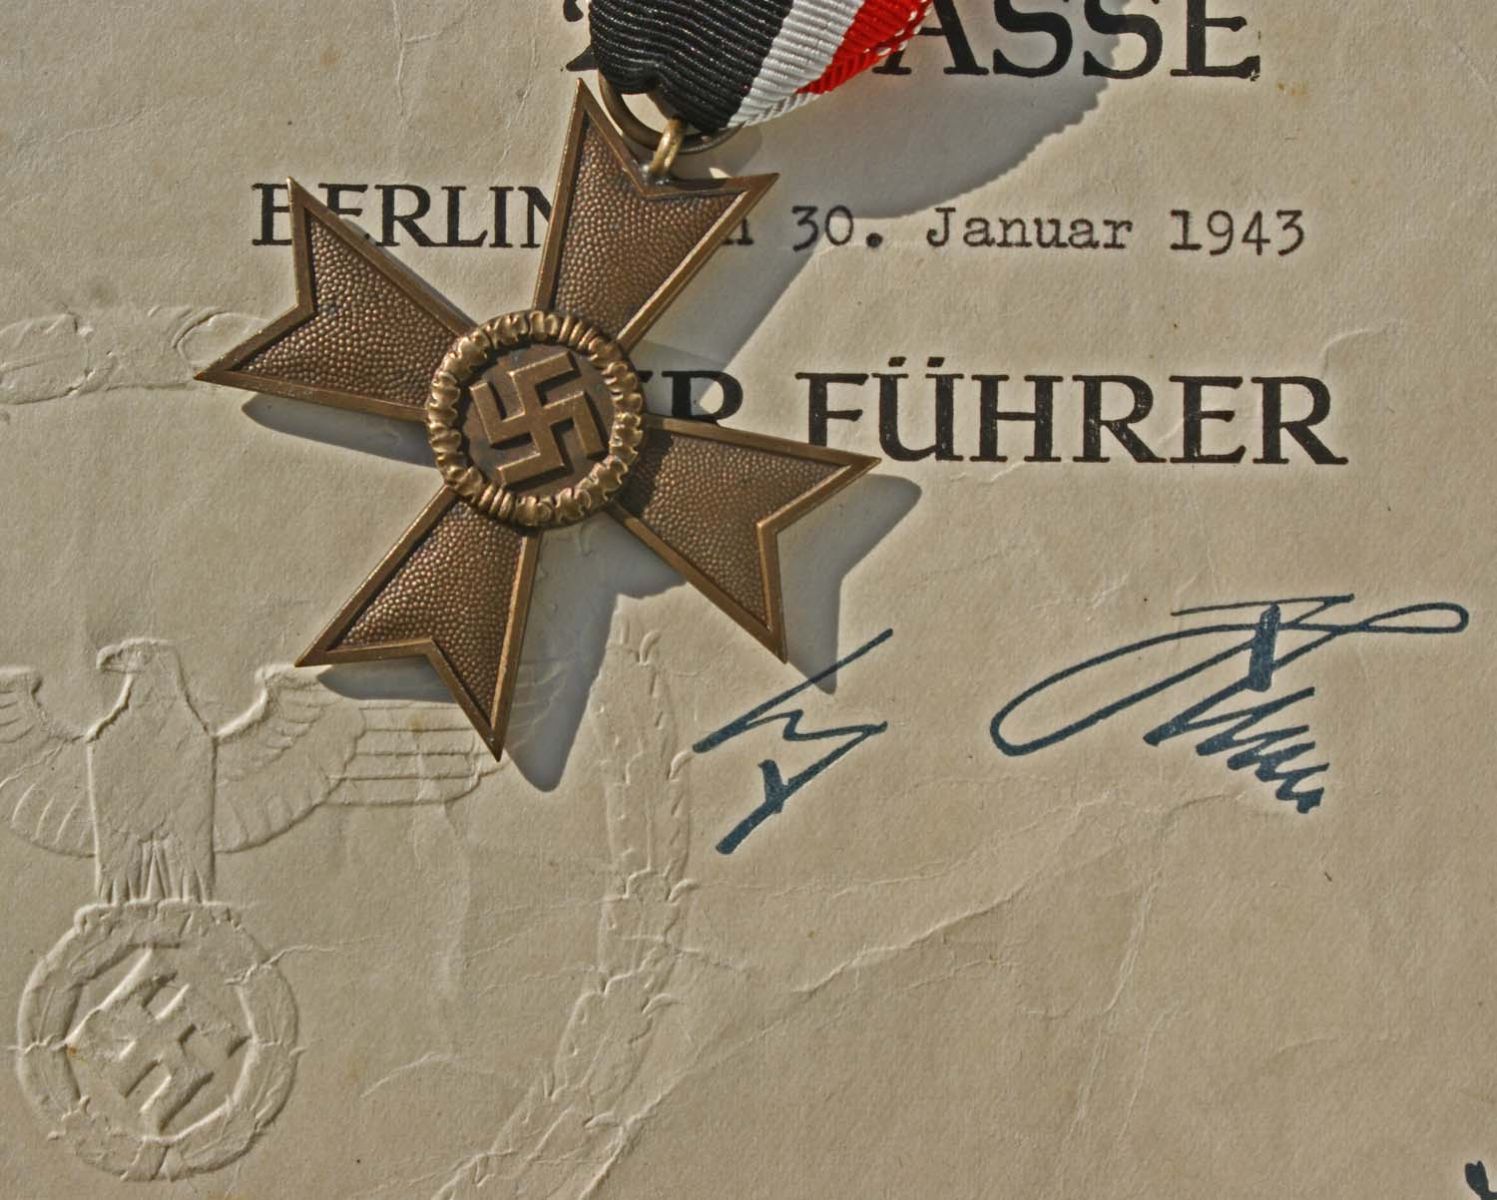 War Merit Cross and Award Document